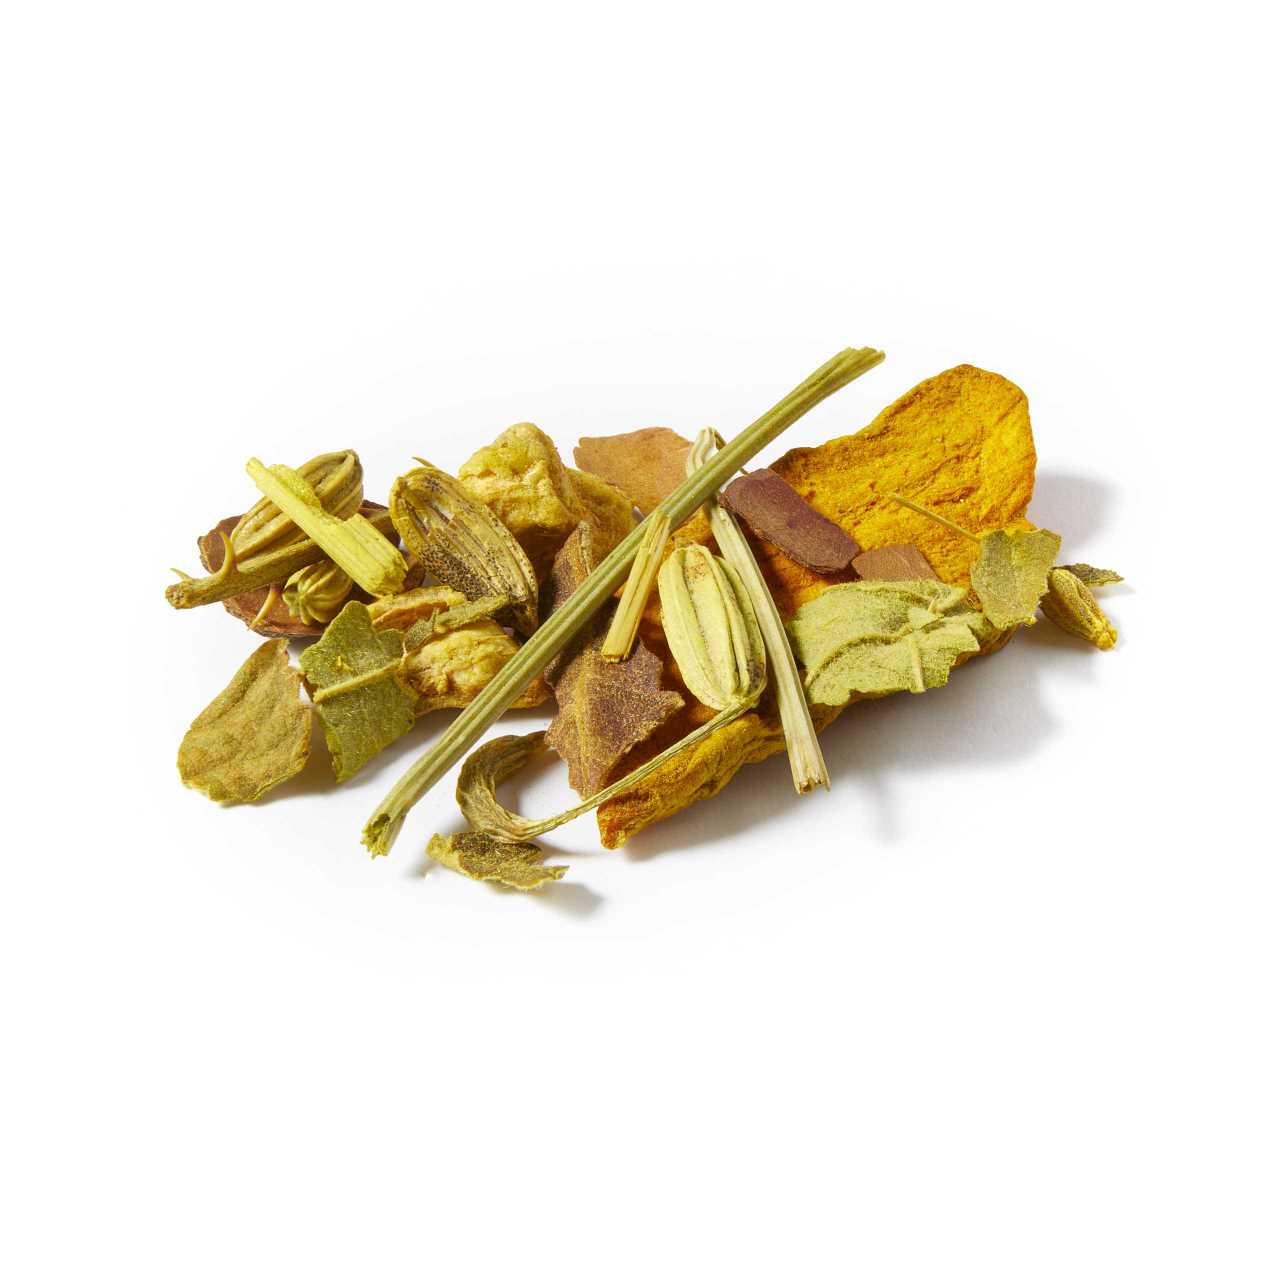 A macro pile of Turmeric Spice Loose Leaf Tea